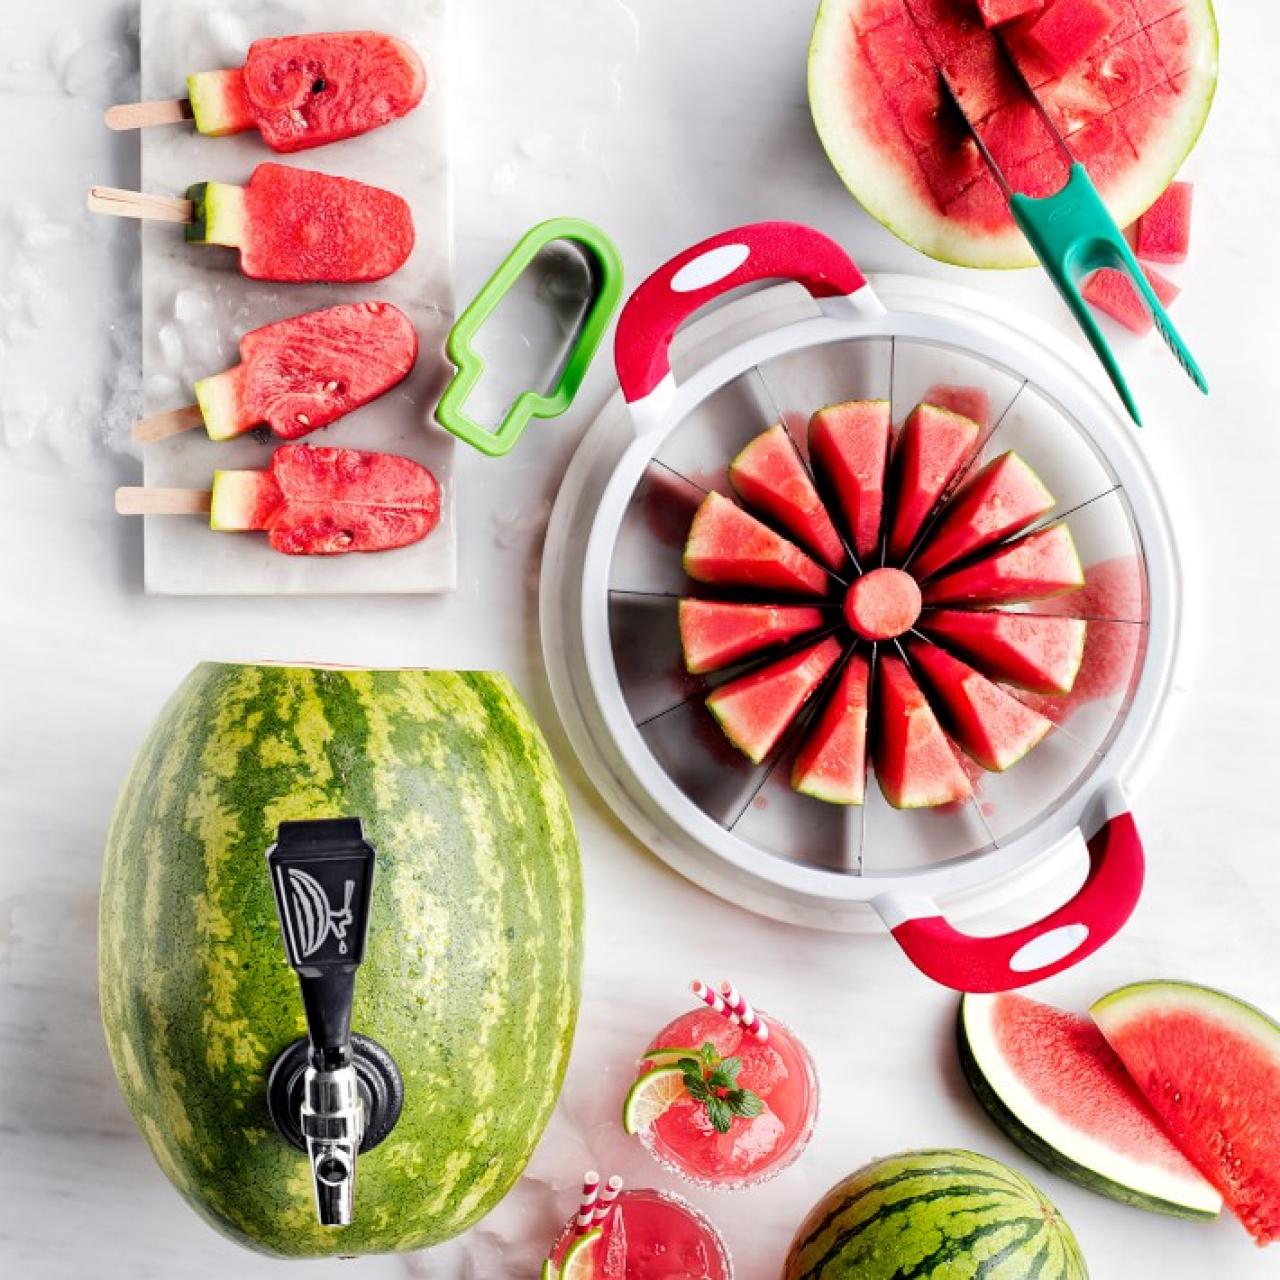 https://food.fnr.sndimg.com/content/dam/images/food/fullset/2019/6/0/rx_williams-sonoma-watermelon-products.jpg.rend.hgtvcom.1280.1280.suffix/1560794252944.jpeg